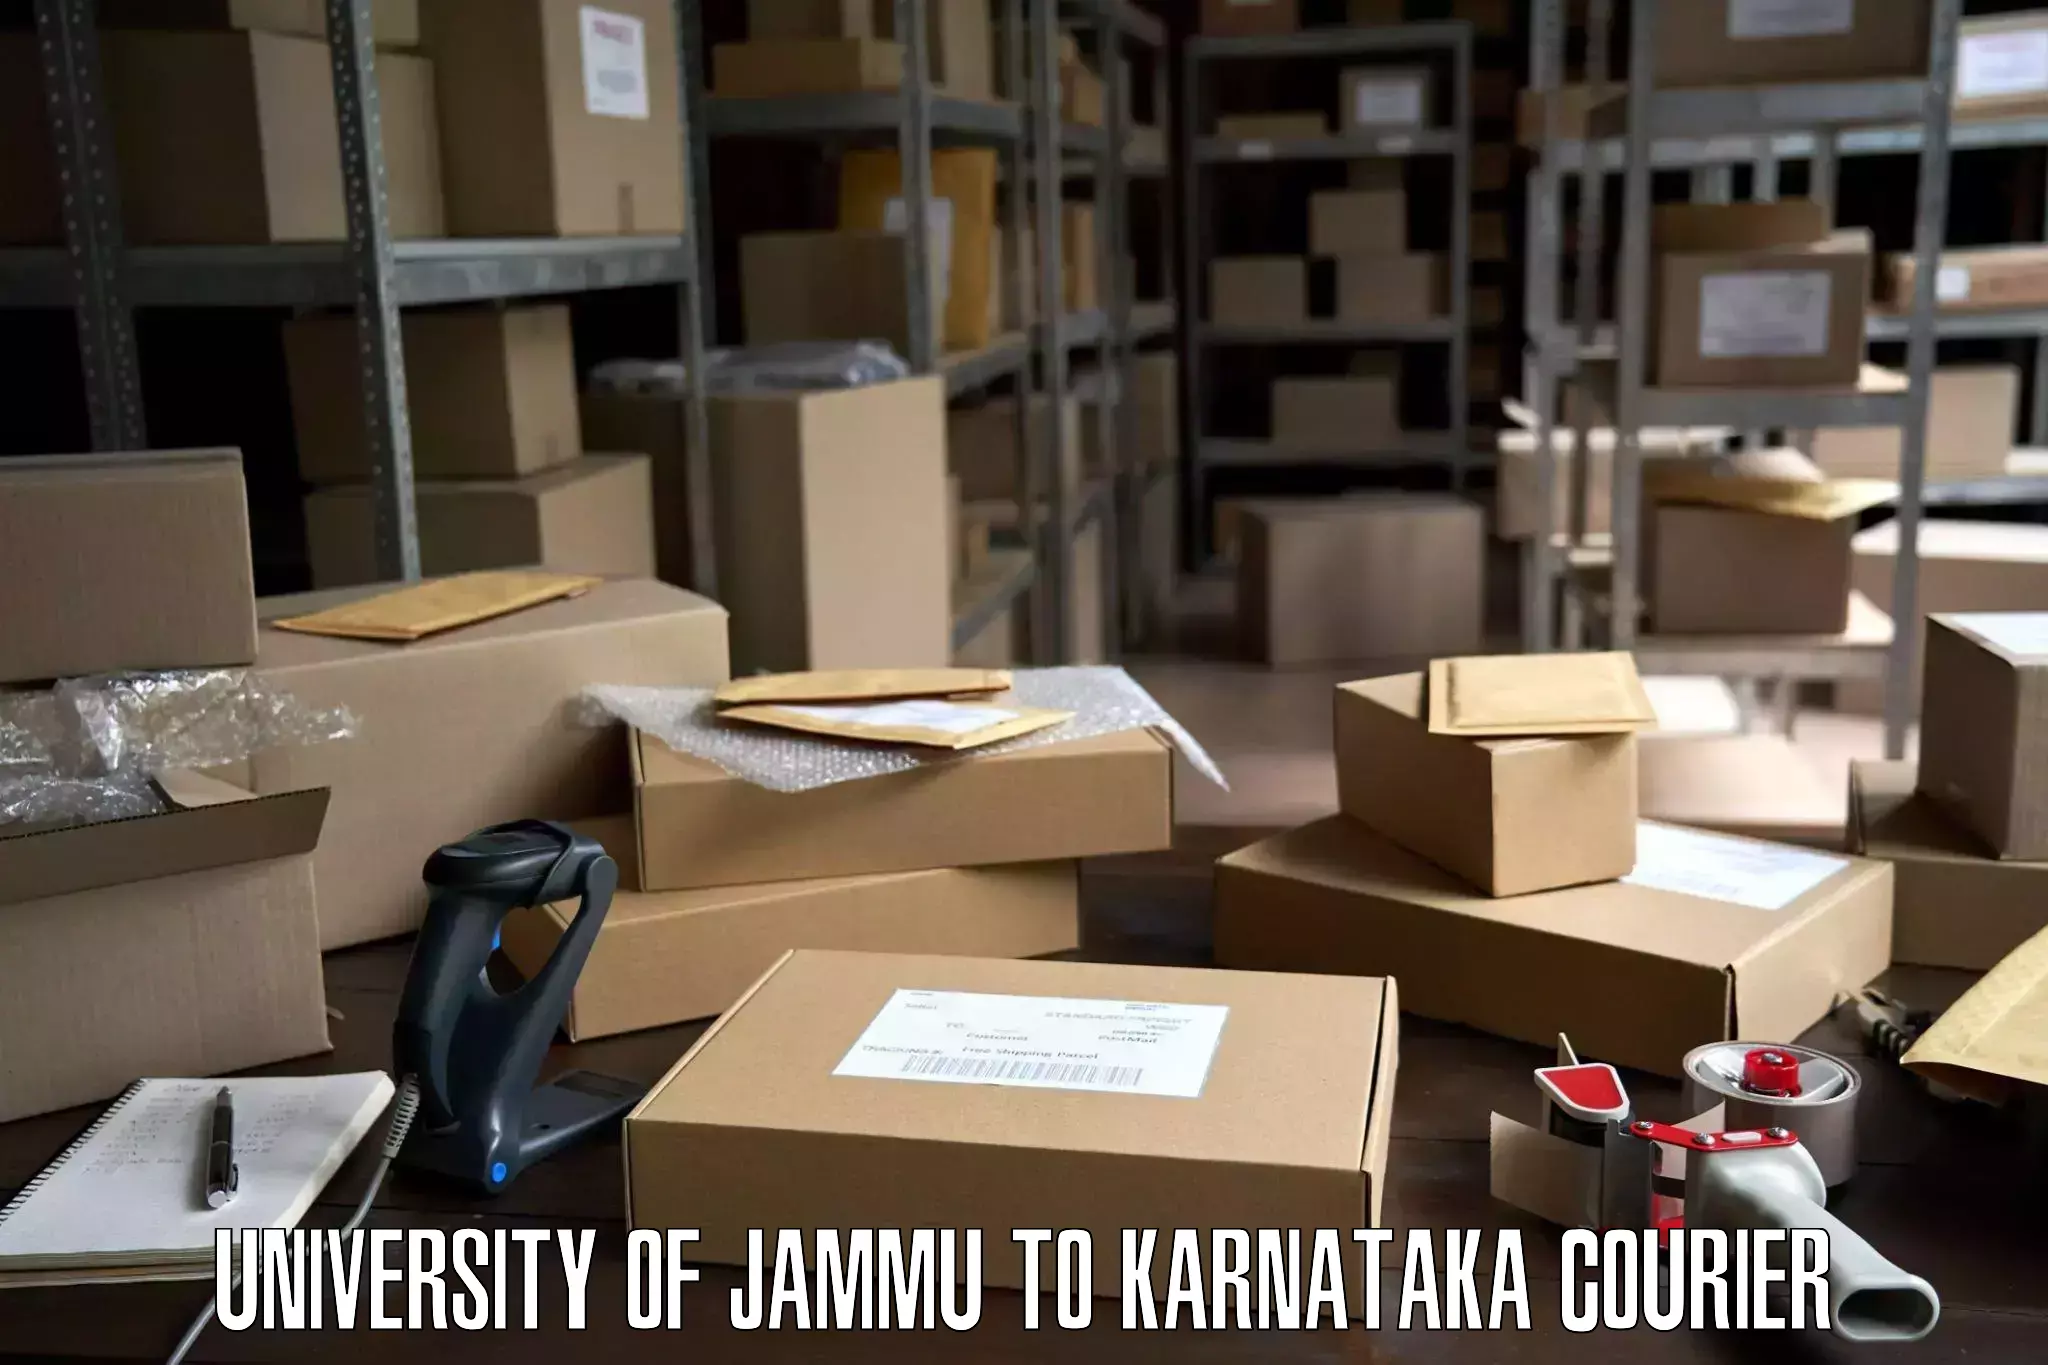 Furniture delivery service University of Jammu to Srirangapatna